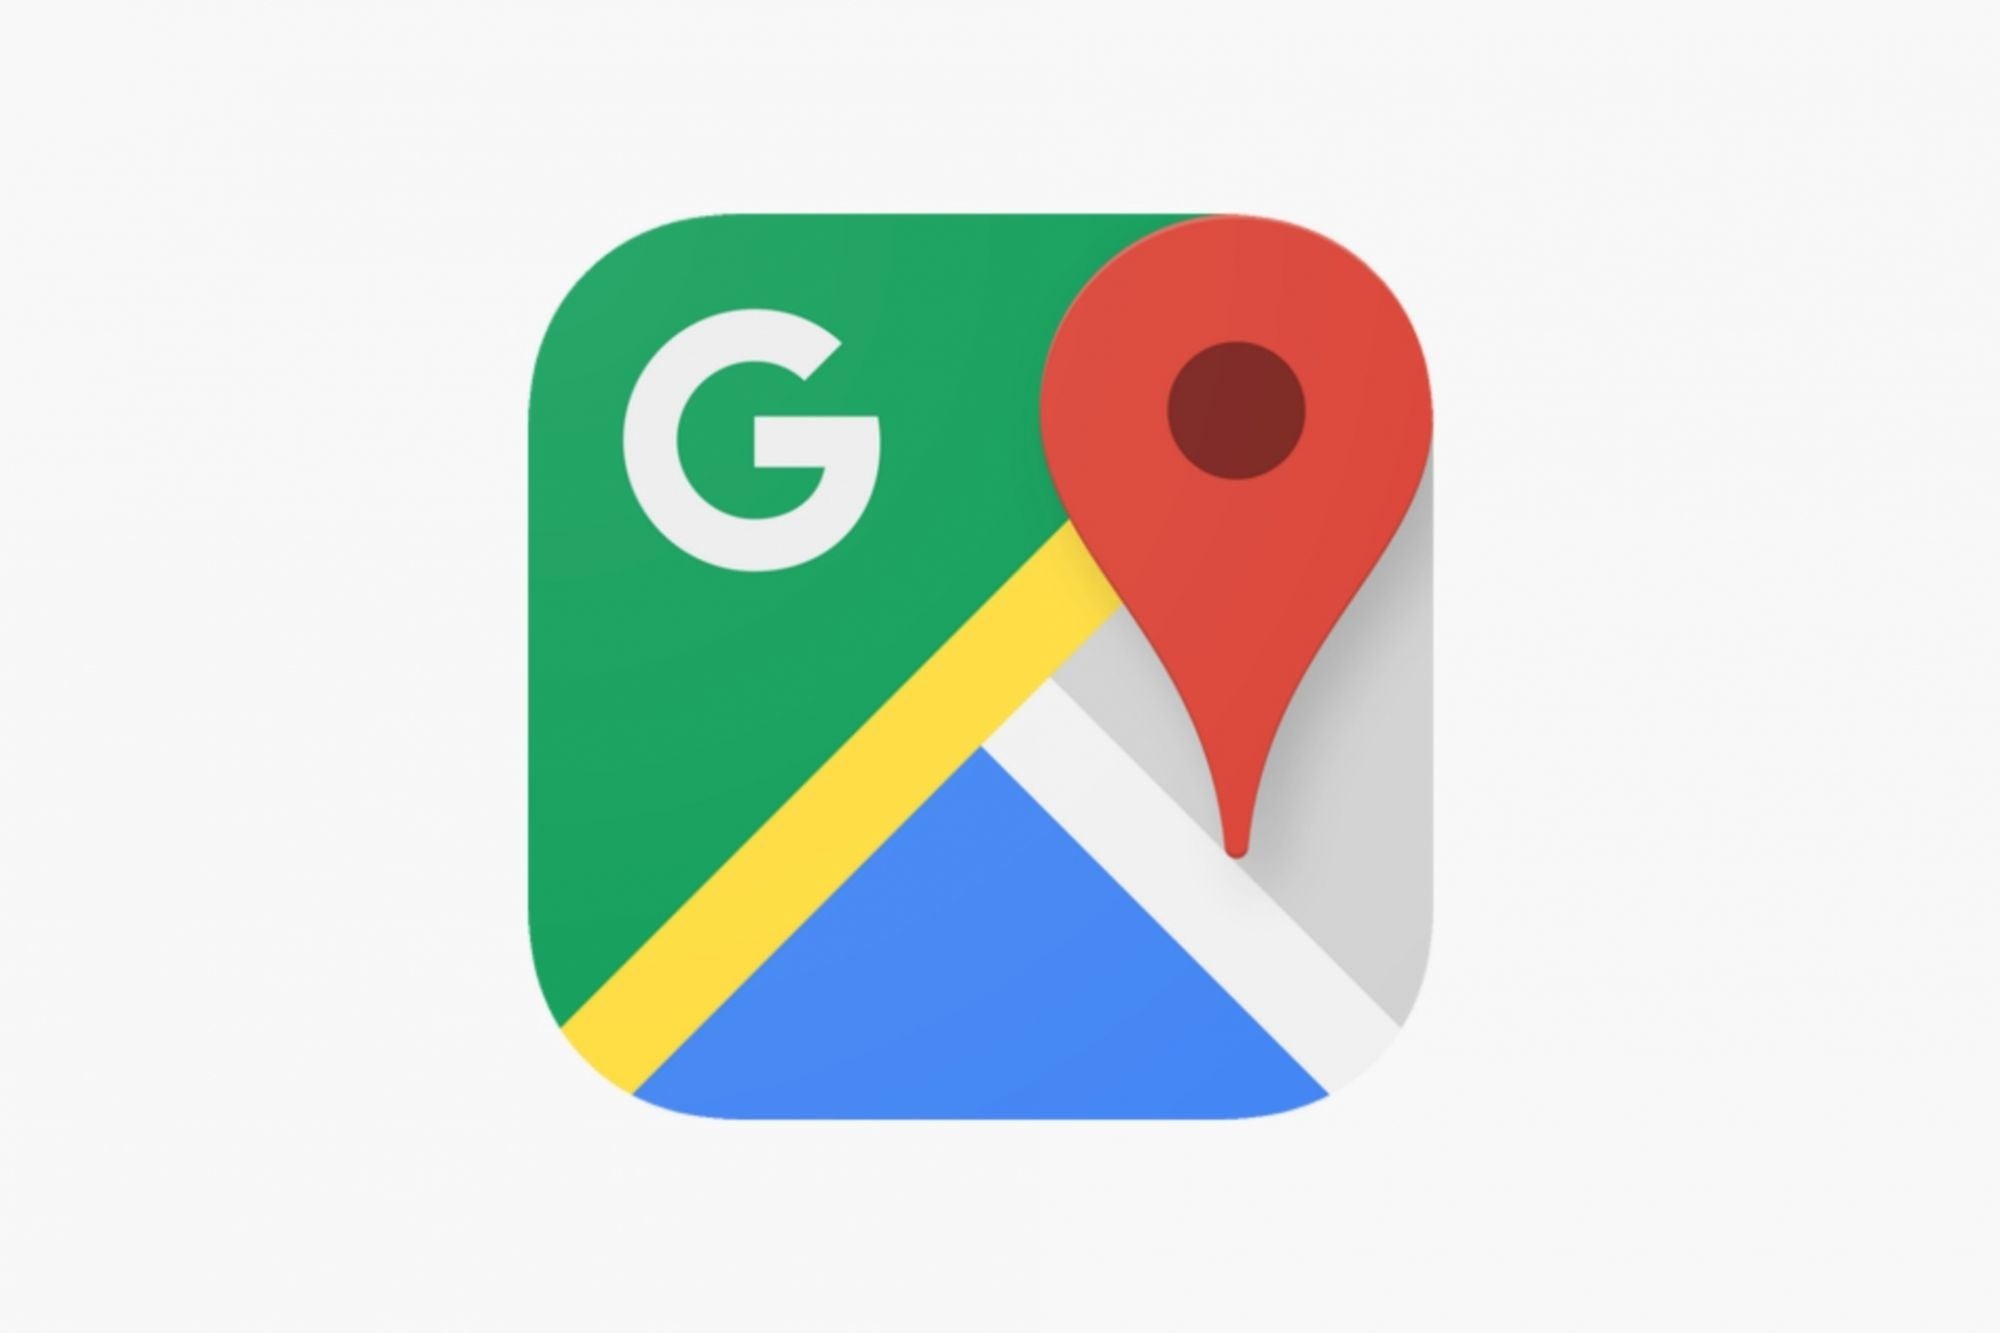 سابقه موقعیت مکانی گوگل مپ